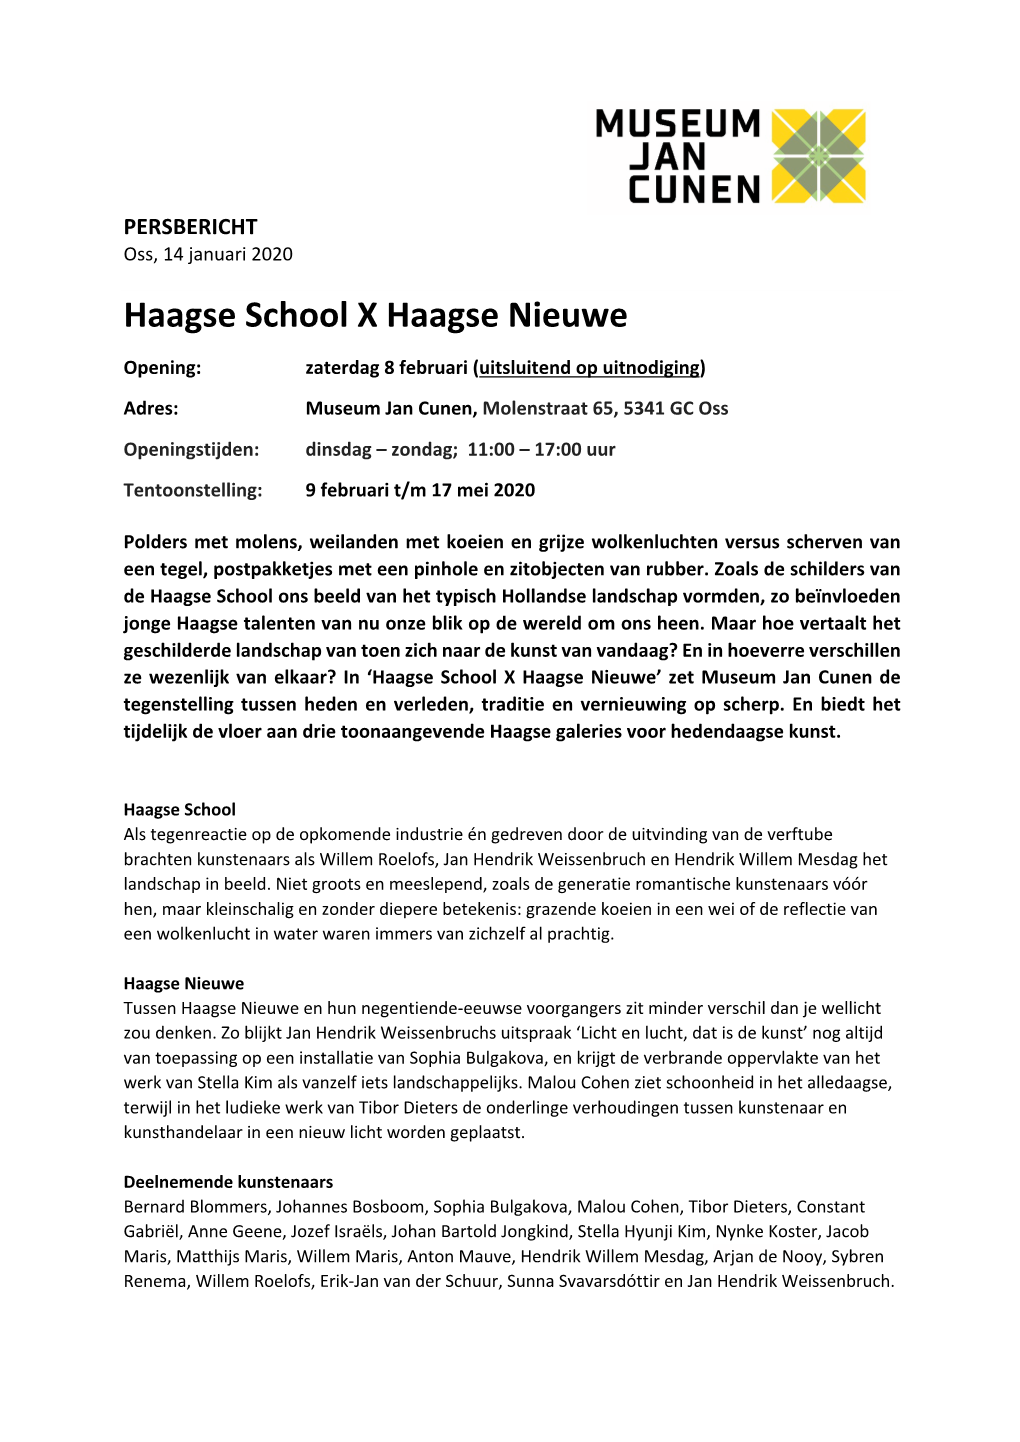 PB Haagse School X Haagse Nieuwe MJC 14012020